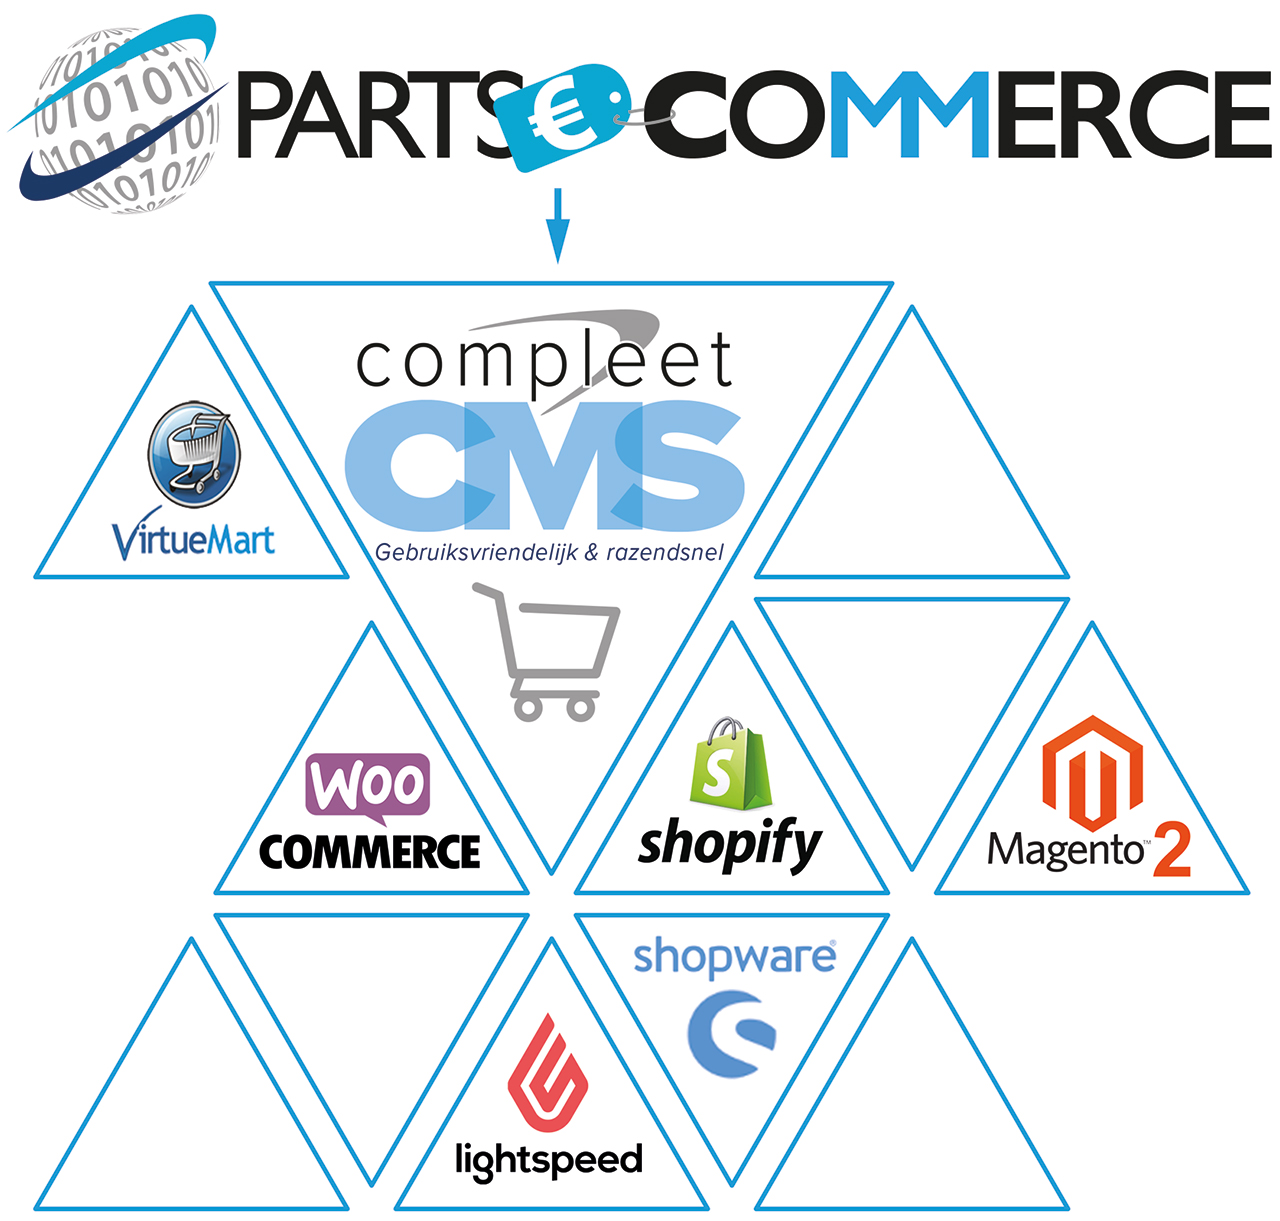 PARTS-Commerce verbindt met e-commerce platforms